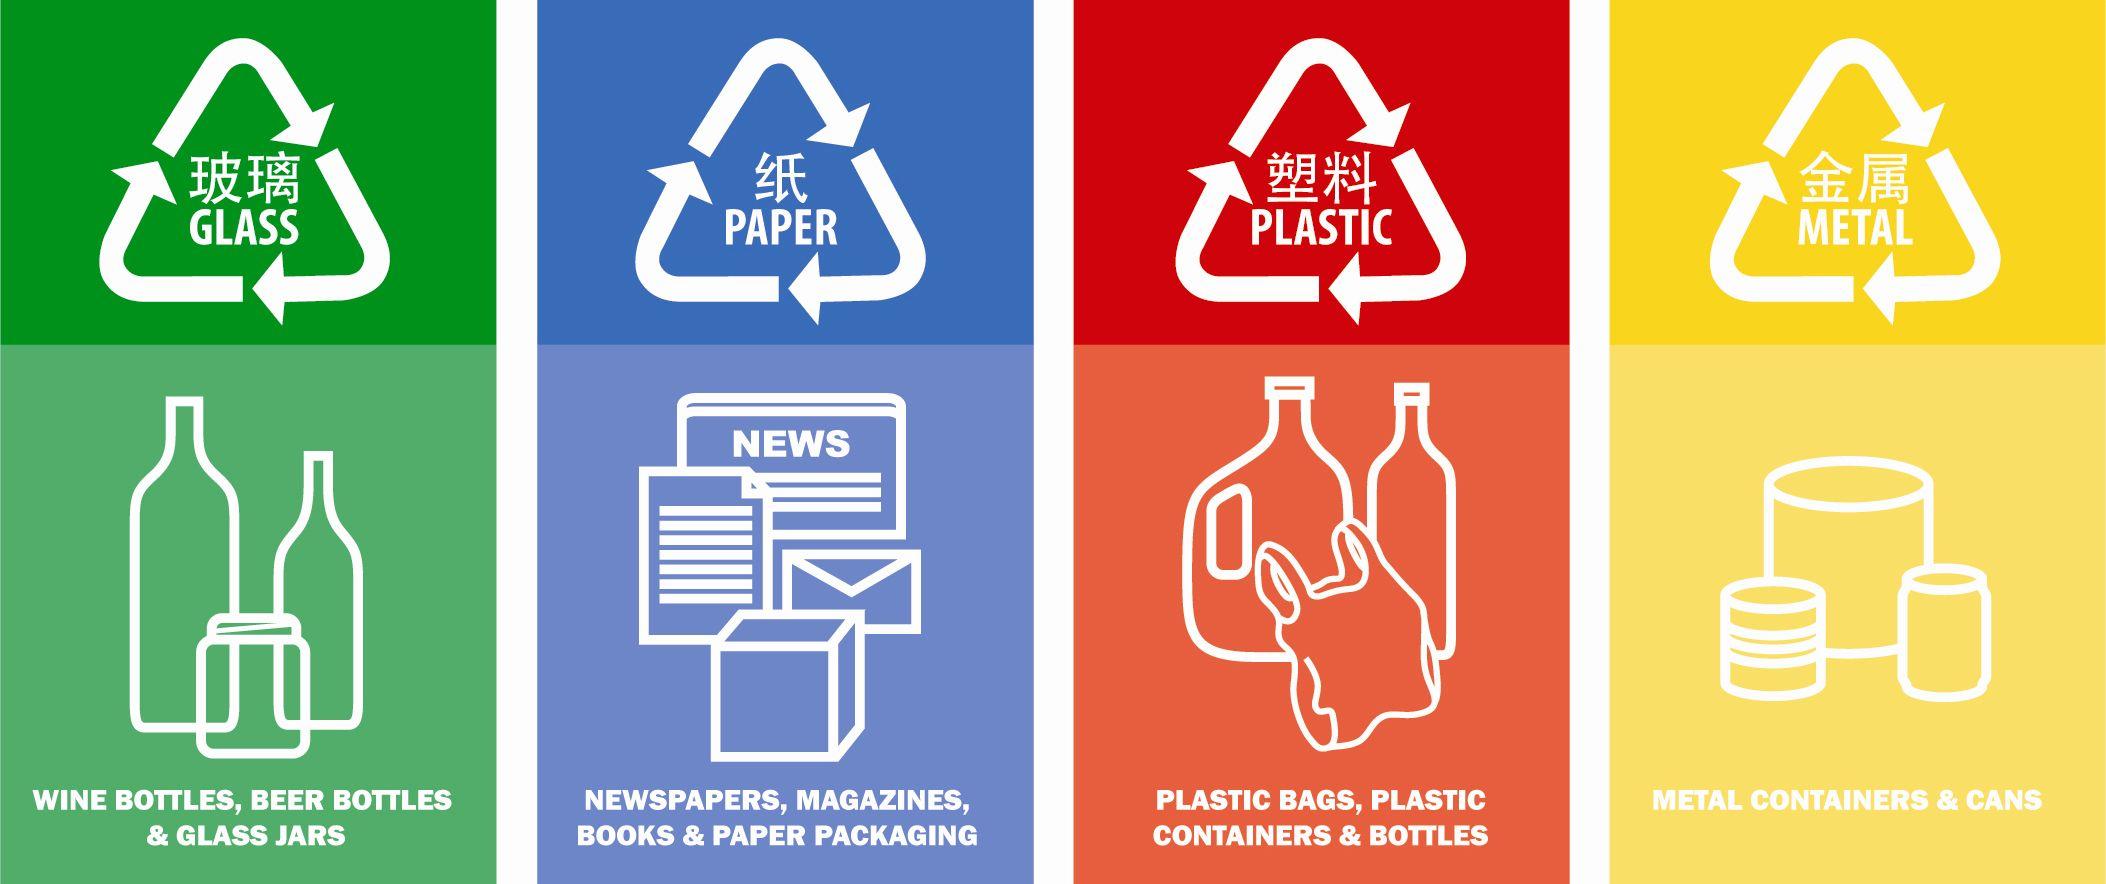 Recycle Bin Logo - Recycling @ Home | Veolia Singapore